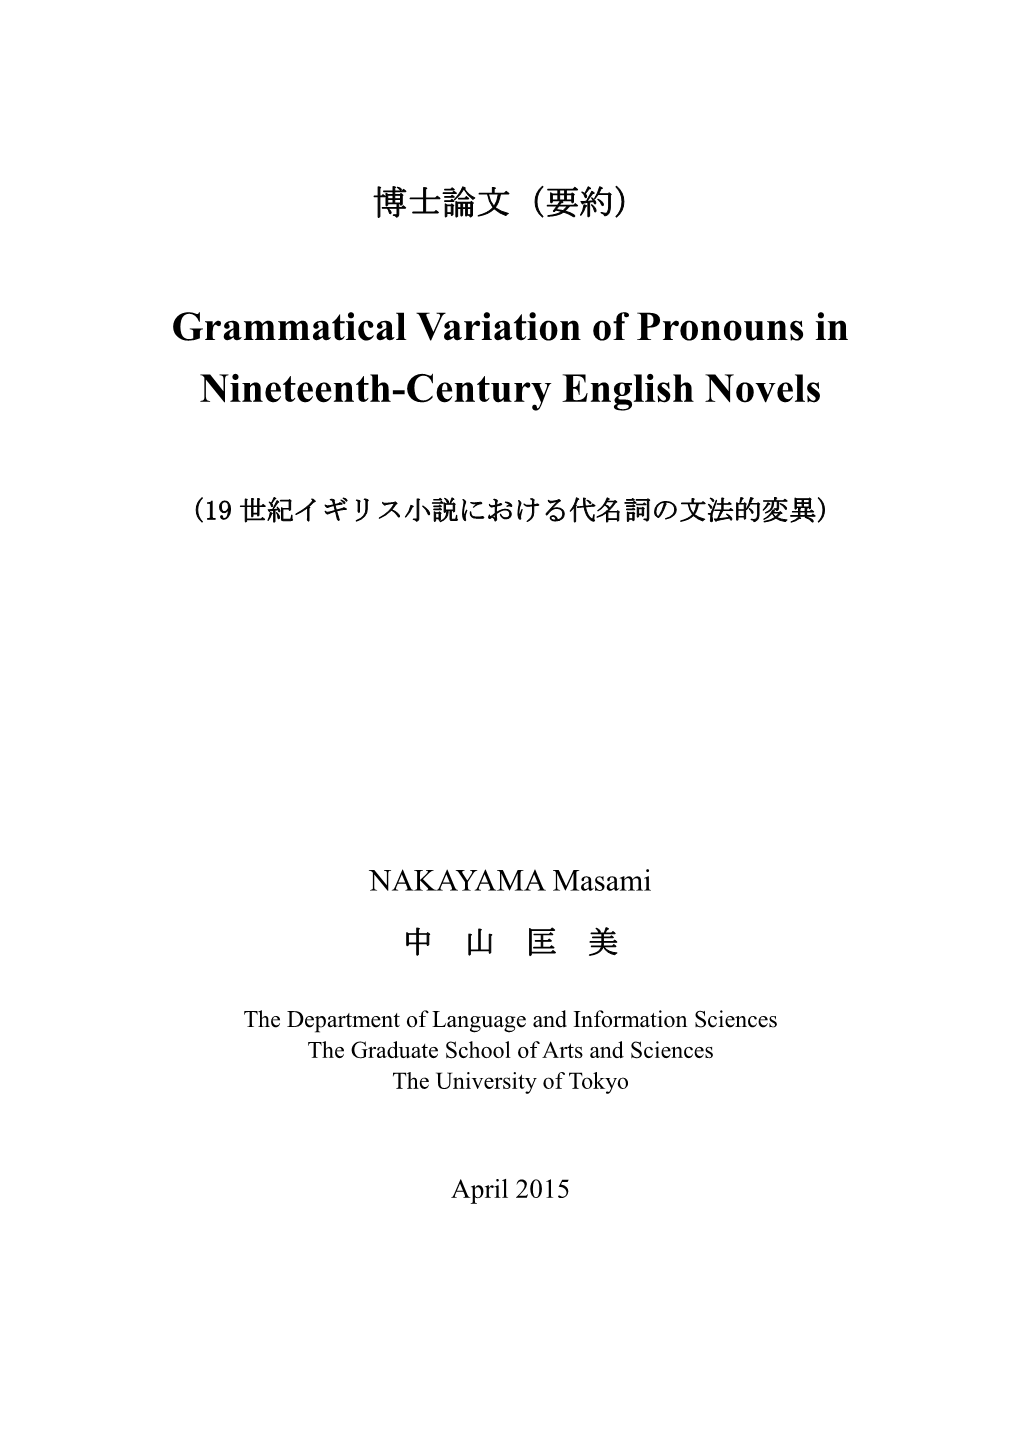 Grammatical Variation of Pronouns in Nineteenth-Century English Novels